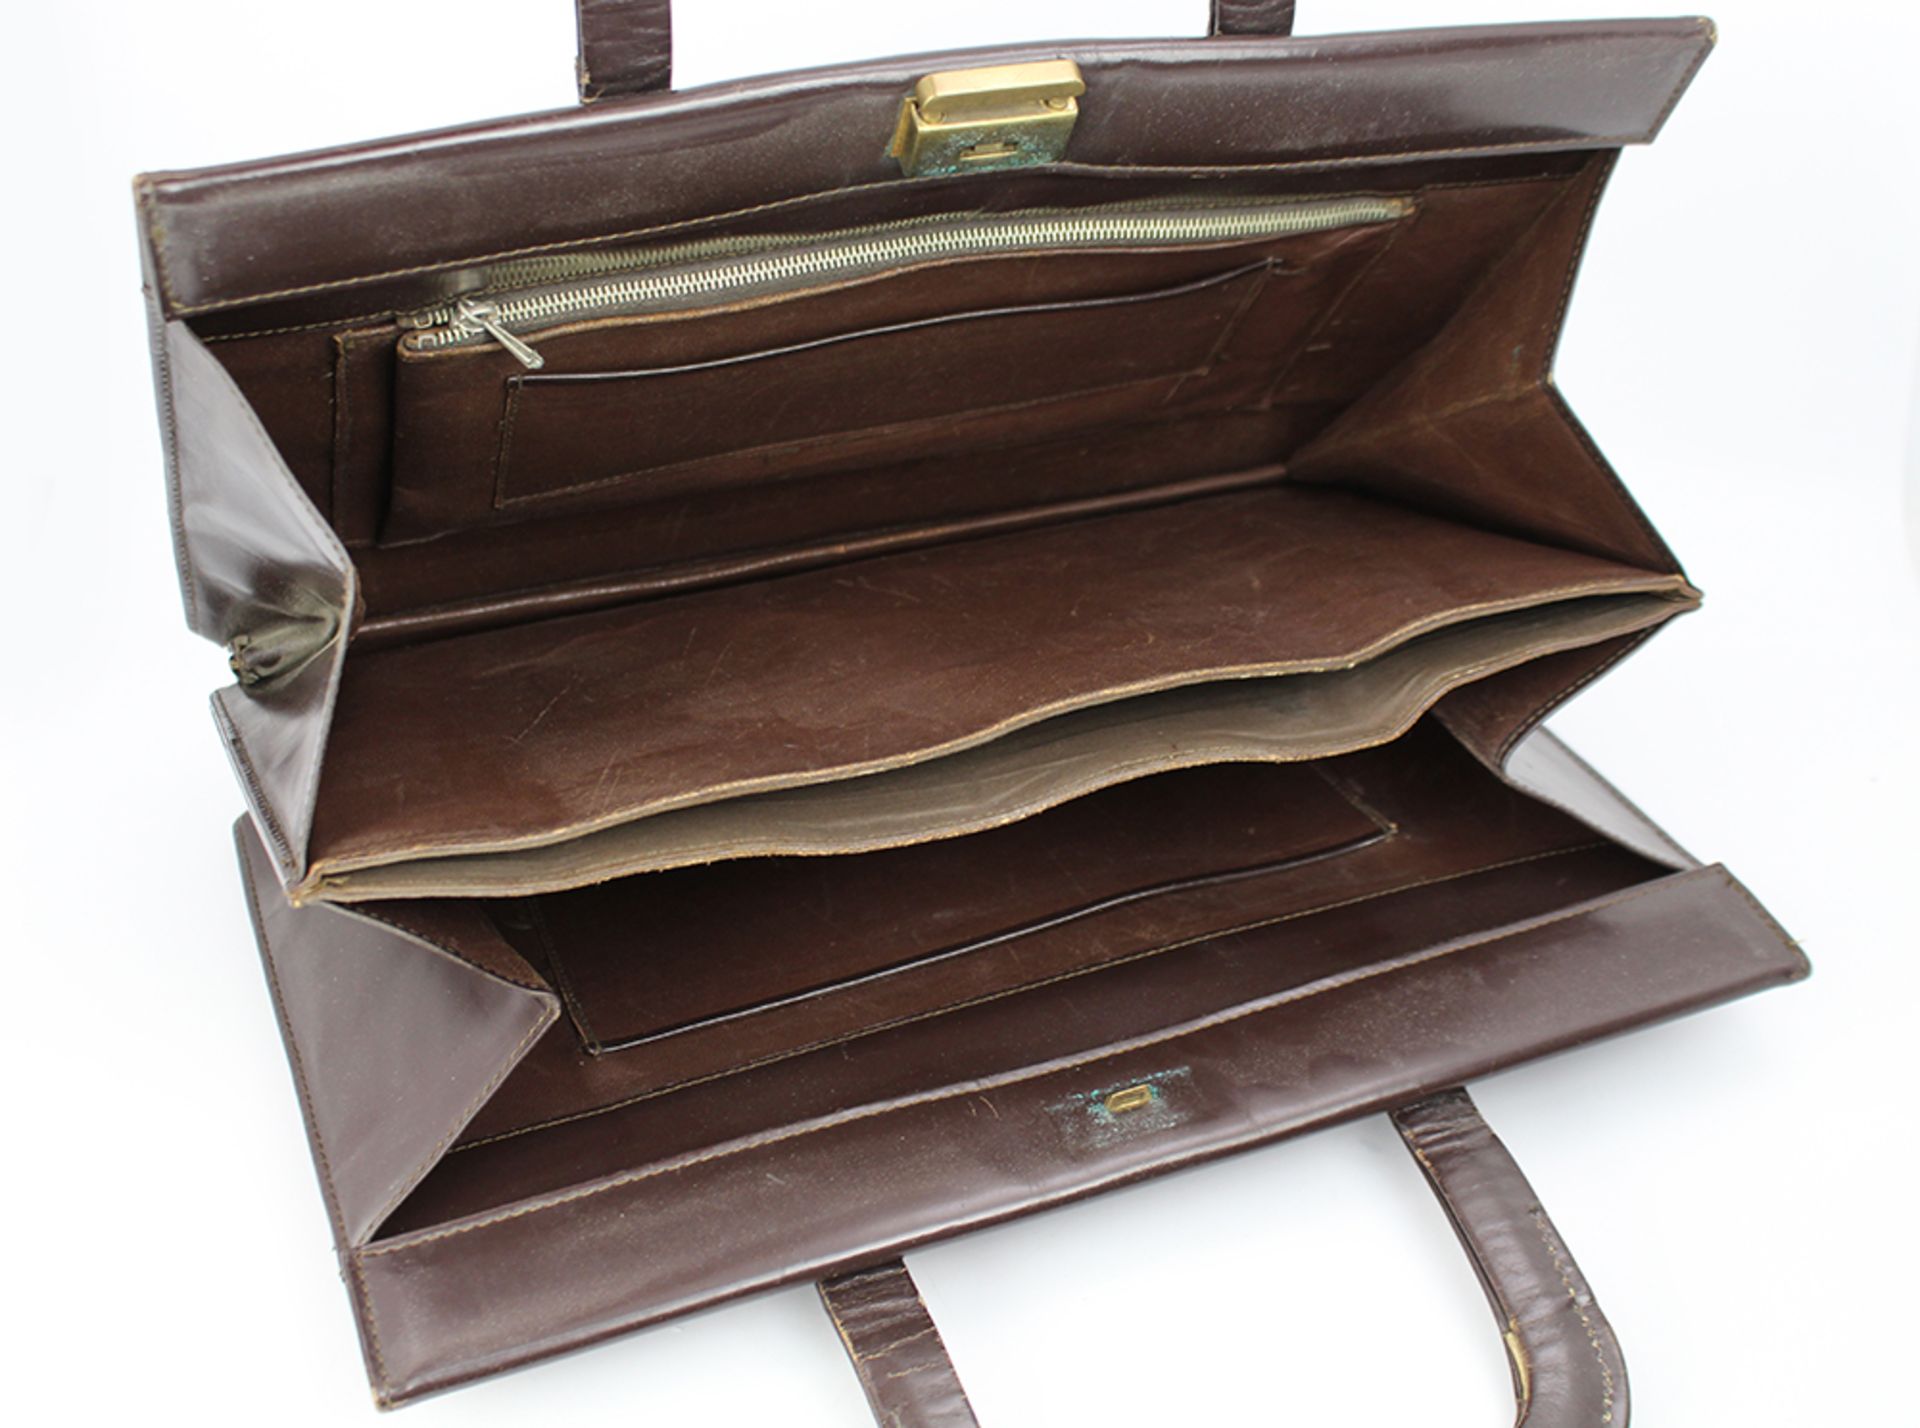 Vintage Patent Leather Handbag - Image 3 of 4